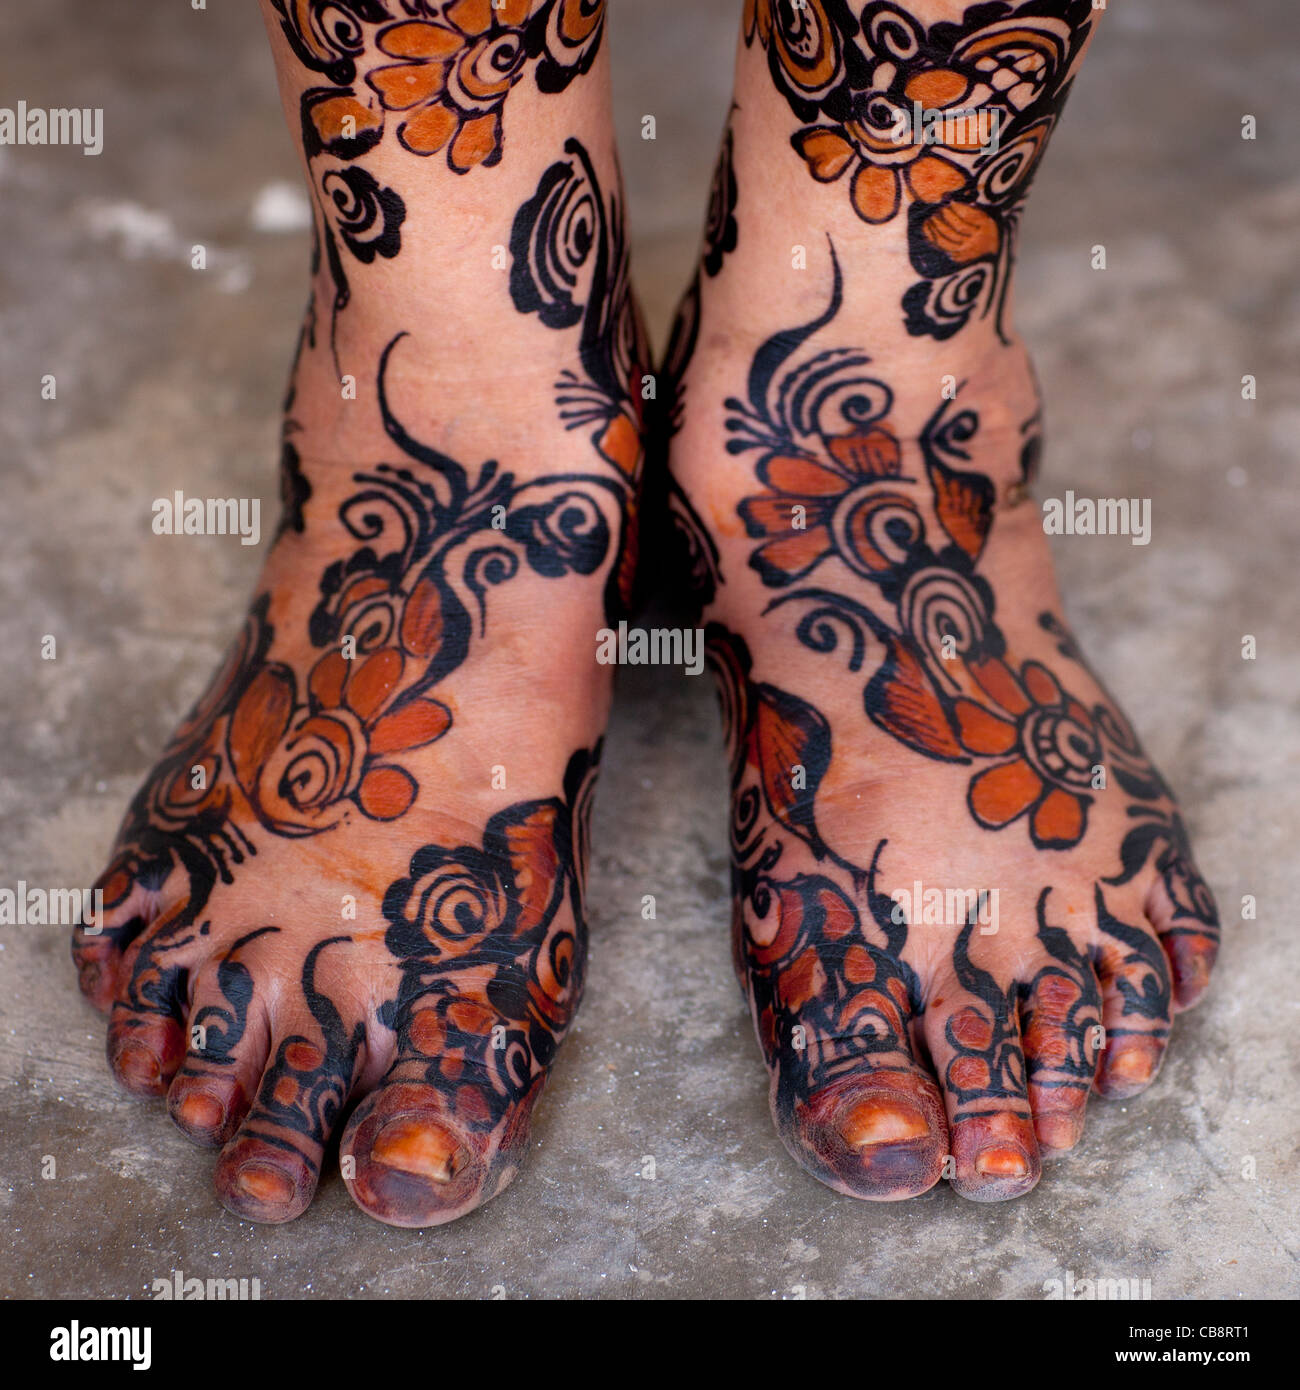 Henna tattoo designs for feet  Mehndi designs on feet  YouTube